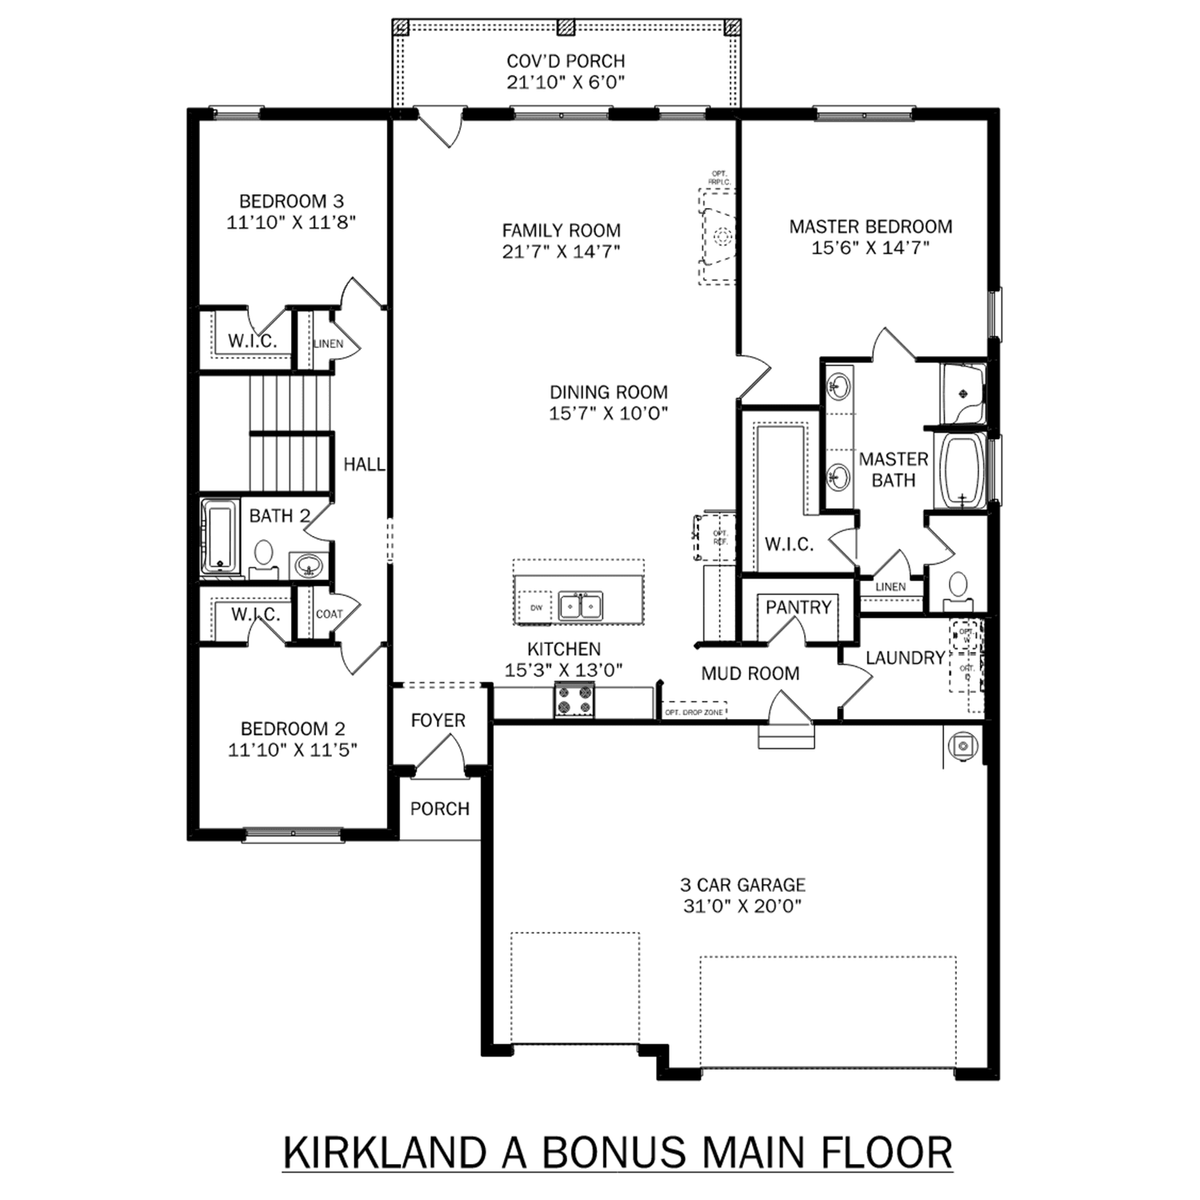 1 - The Kirkland with Bonus floor plan layout for 605 Magnolia Cove Lane SW in Davidson Homes' Magnolia Preserve community.